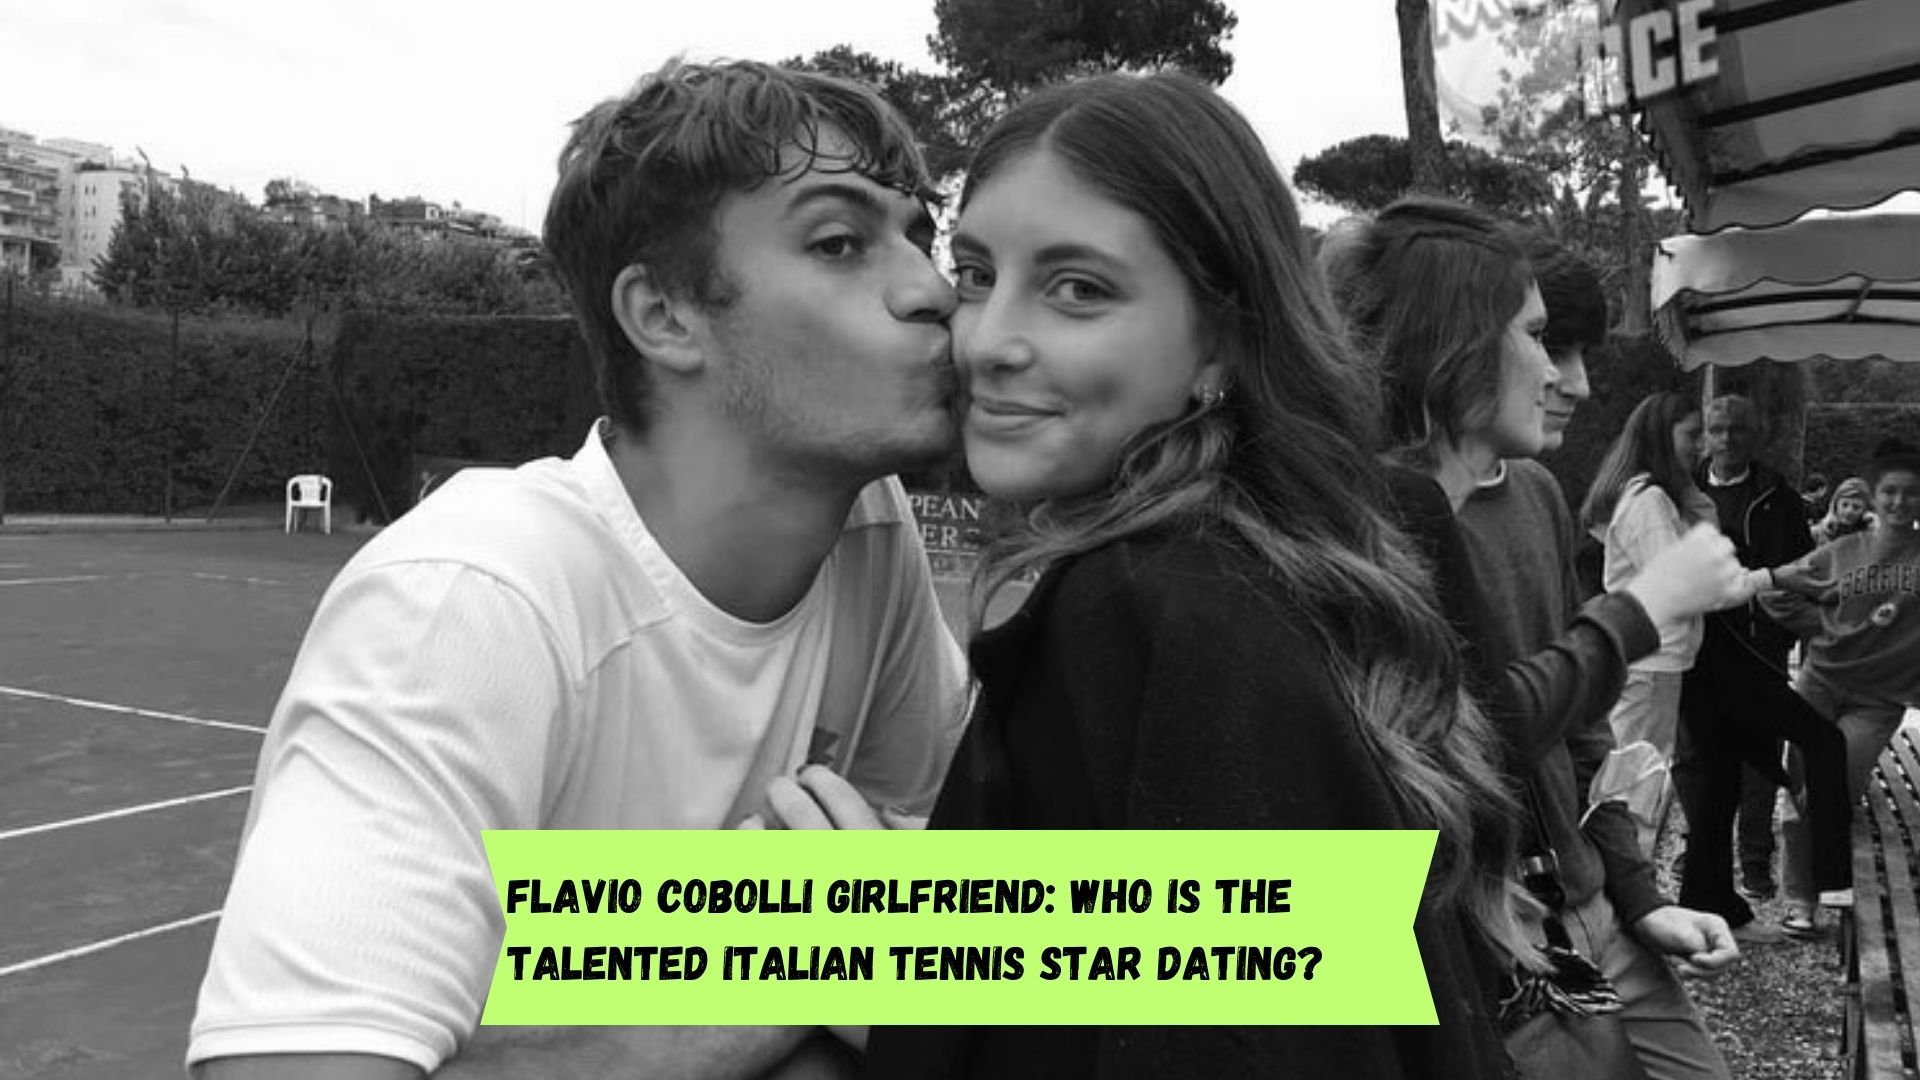 Flavio Cobolli girlfriend: Who is the talented Italian tennis star dating?